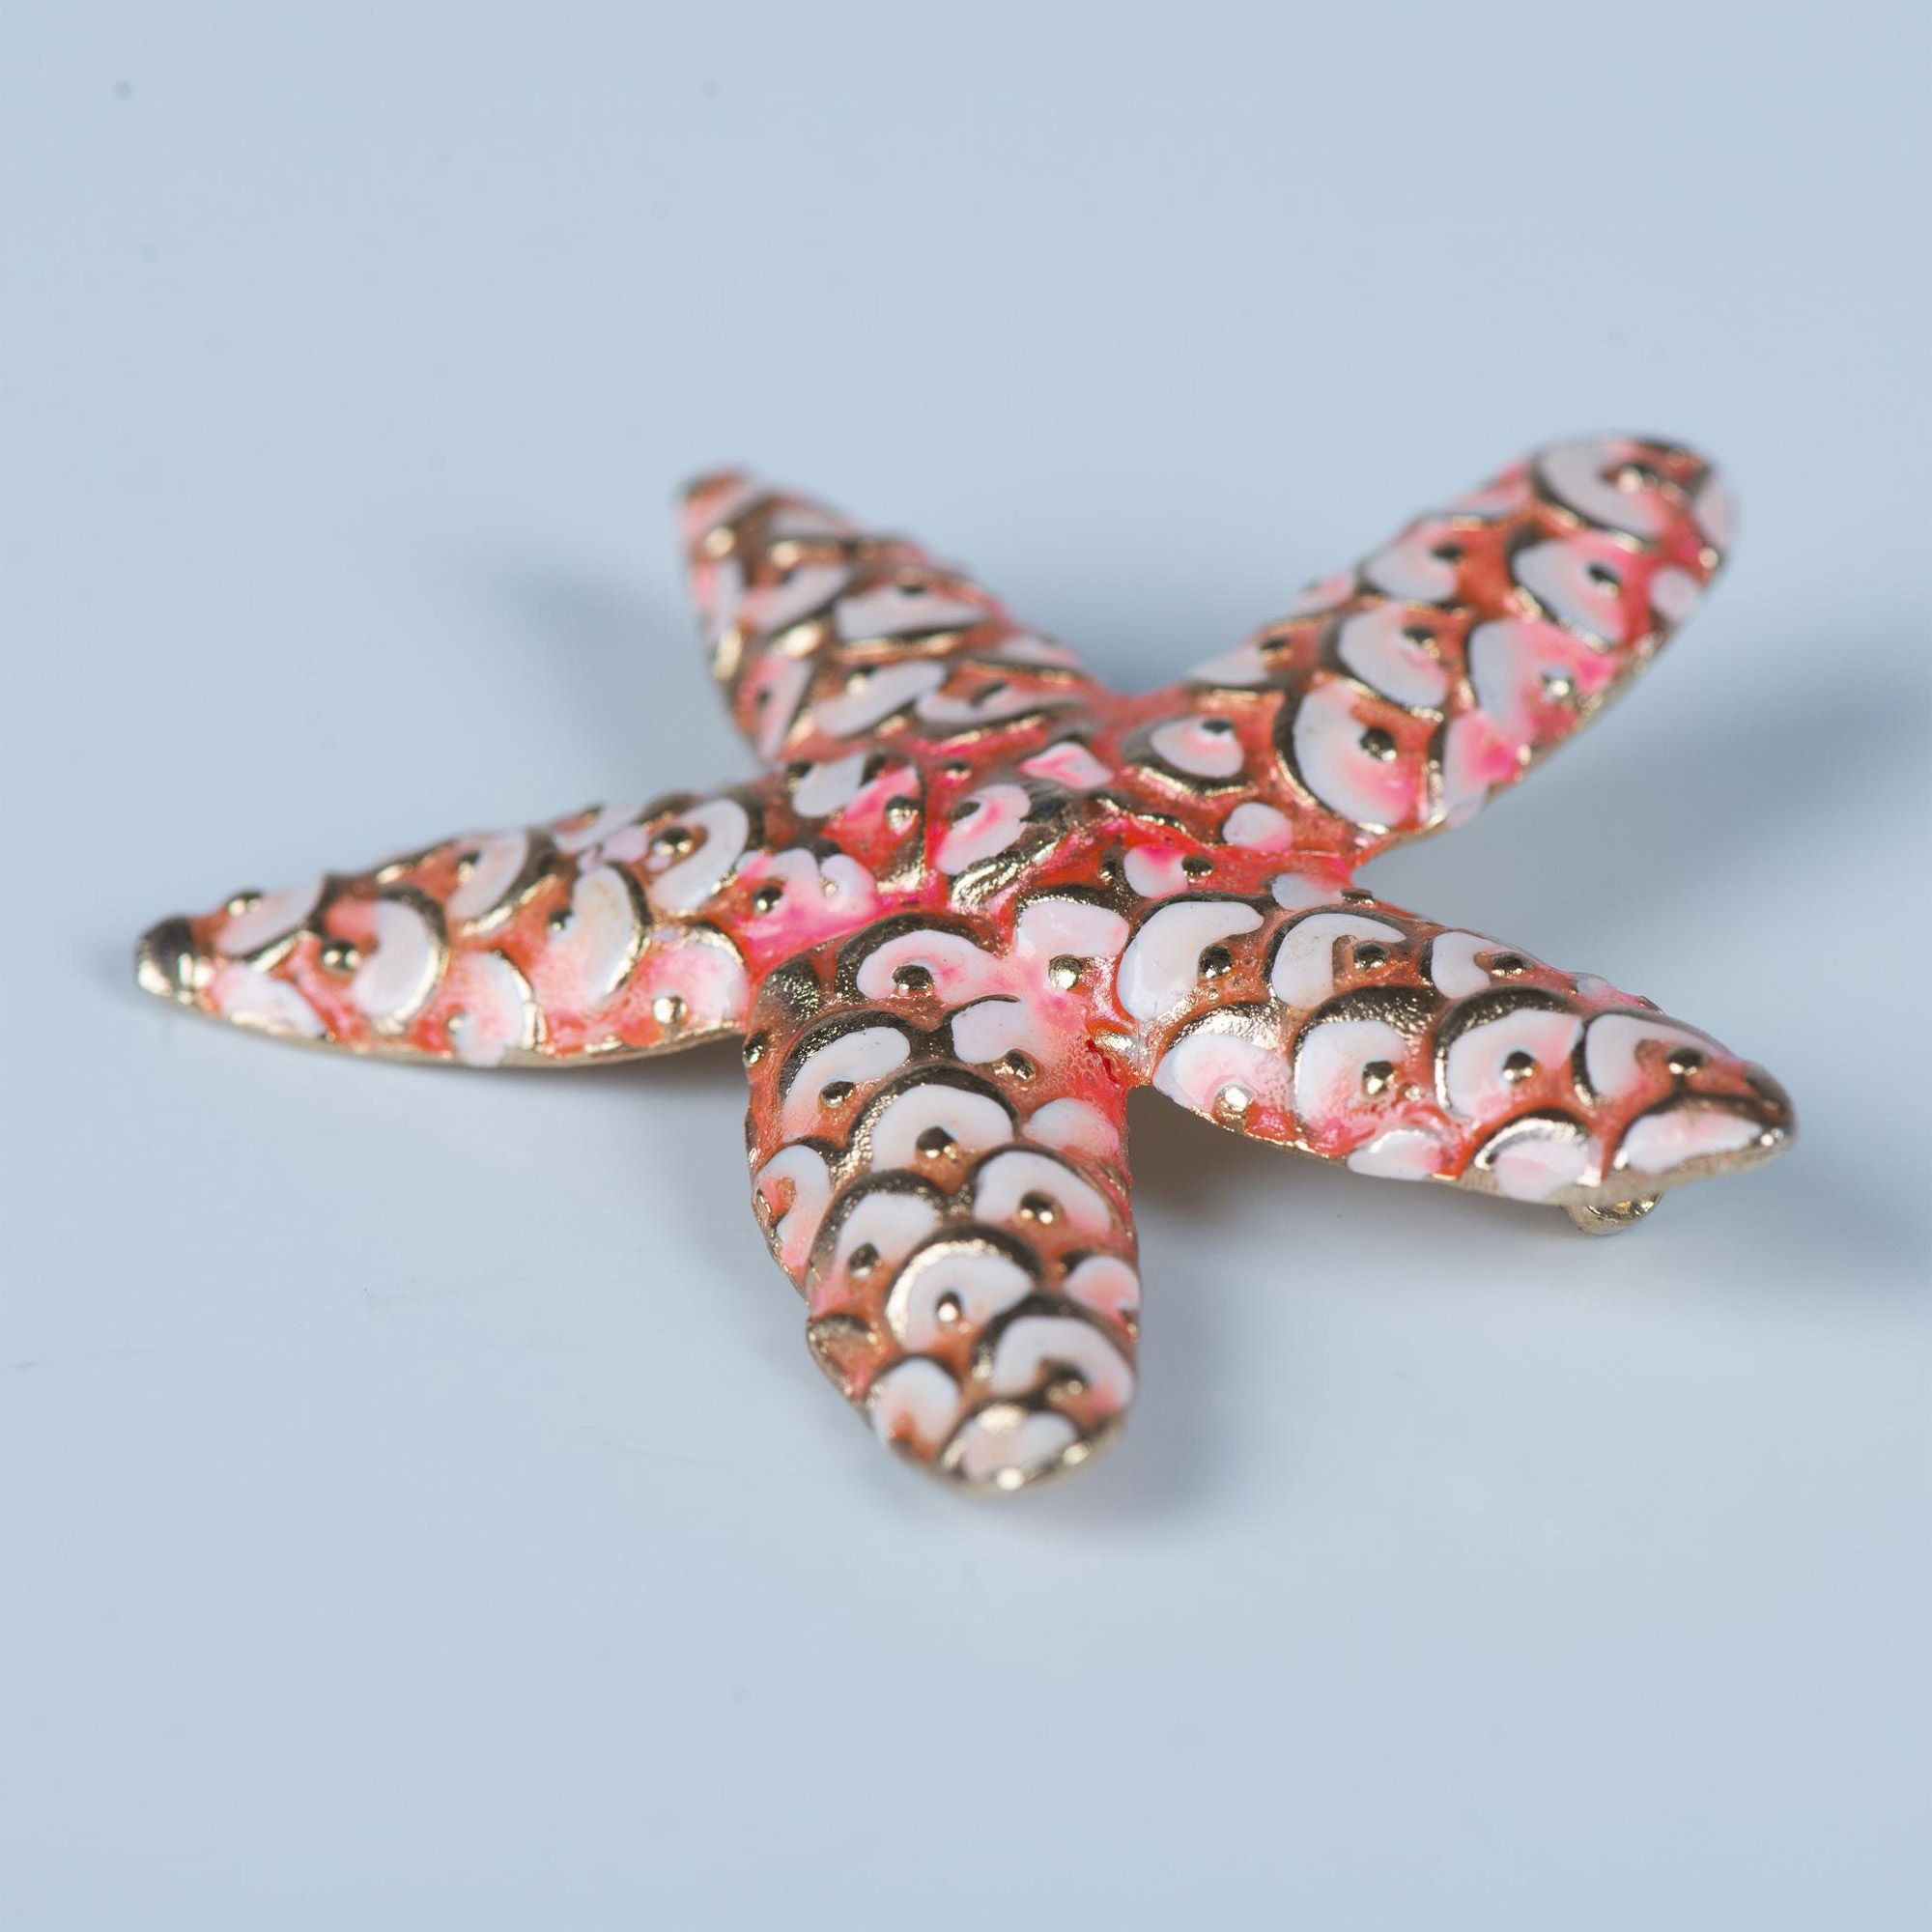 Fun Pink Starfish Brooch - Image 3 of 3